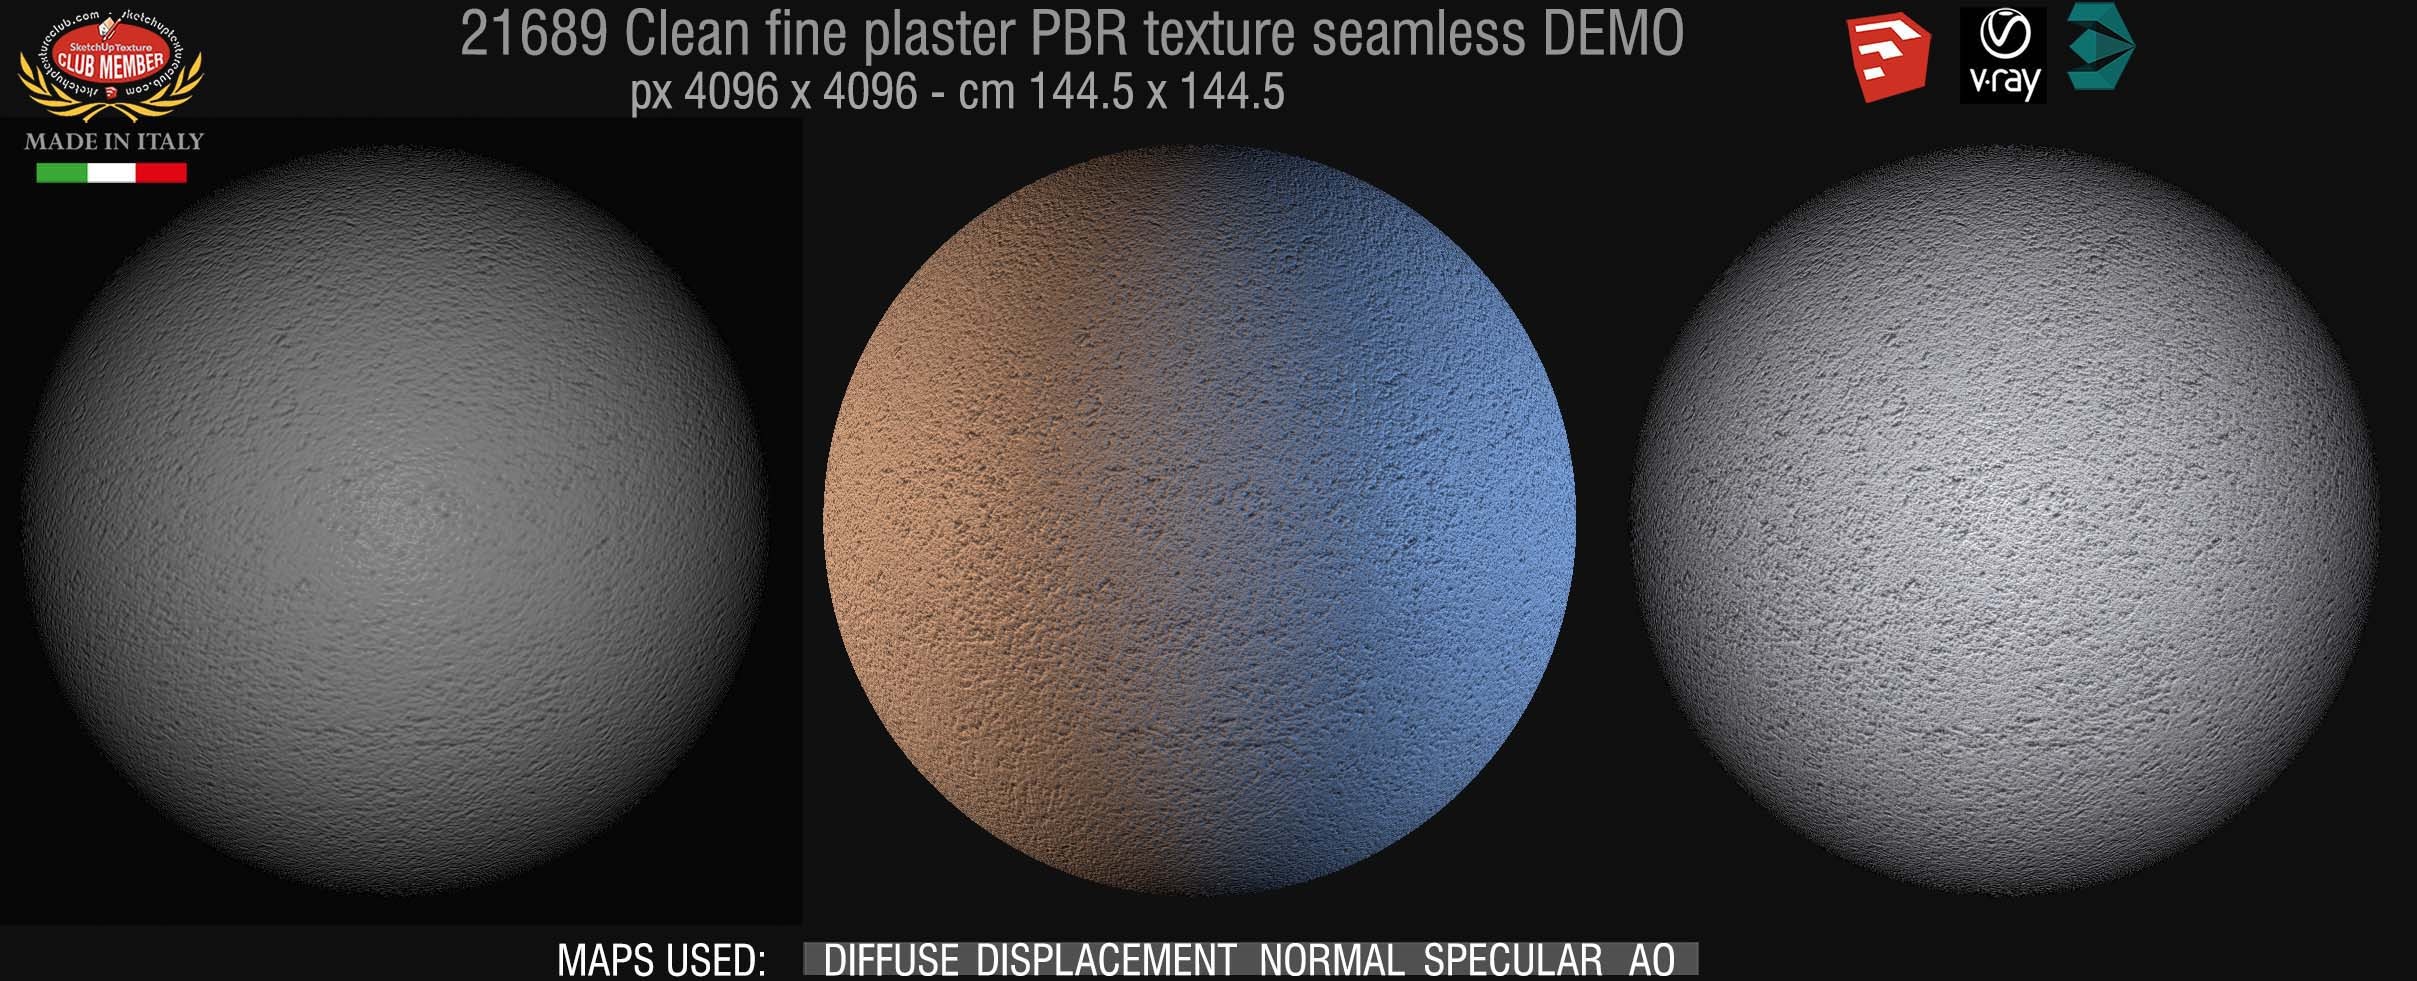 21689 Clean fine plaster PBR texture seamless DEMO